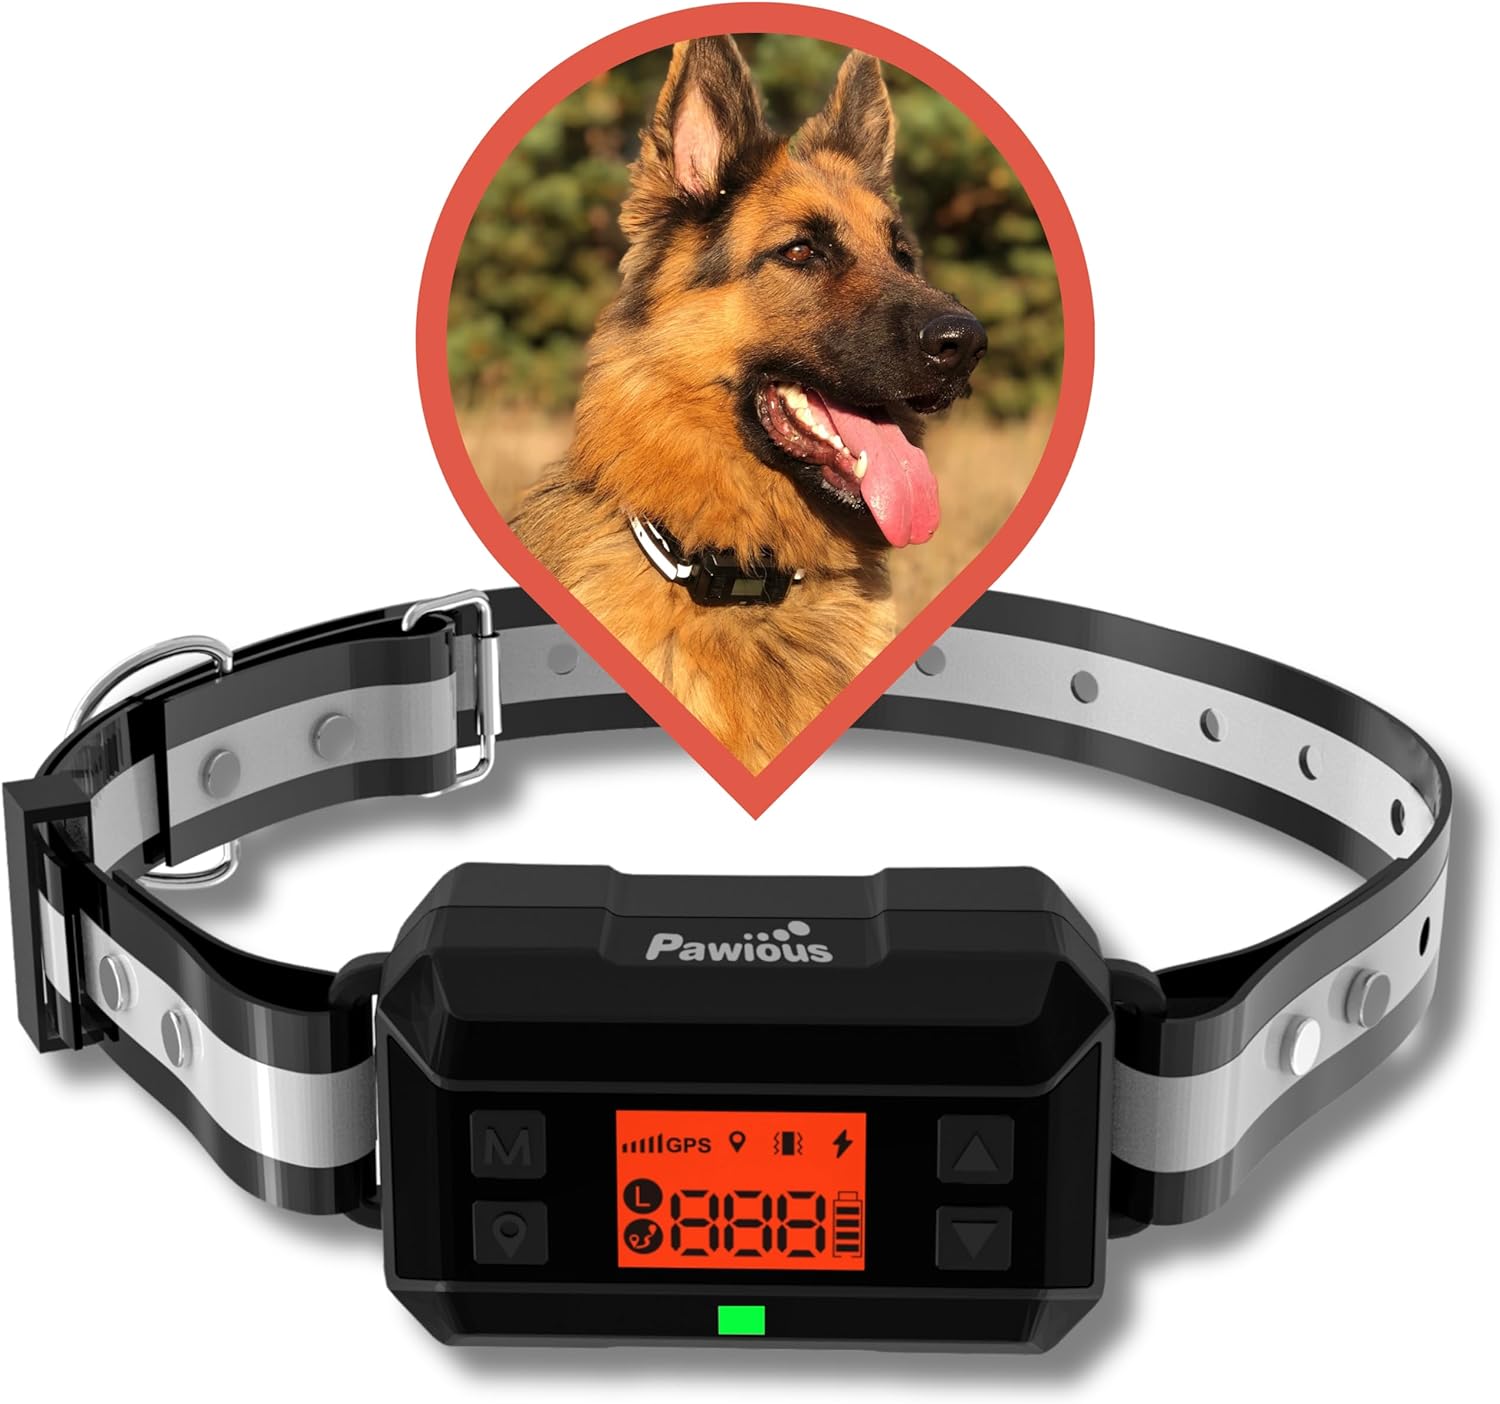 Pawious GPS Wireless Dog Fence